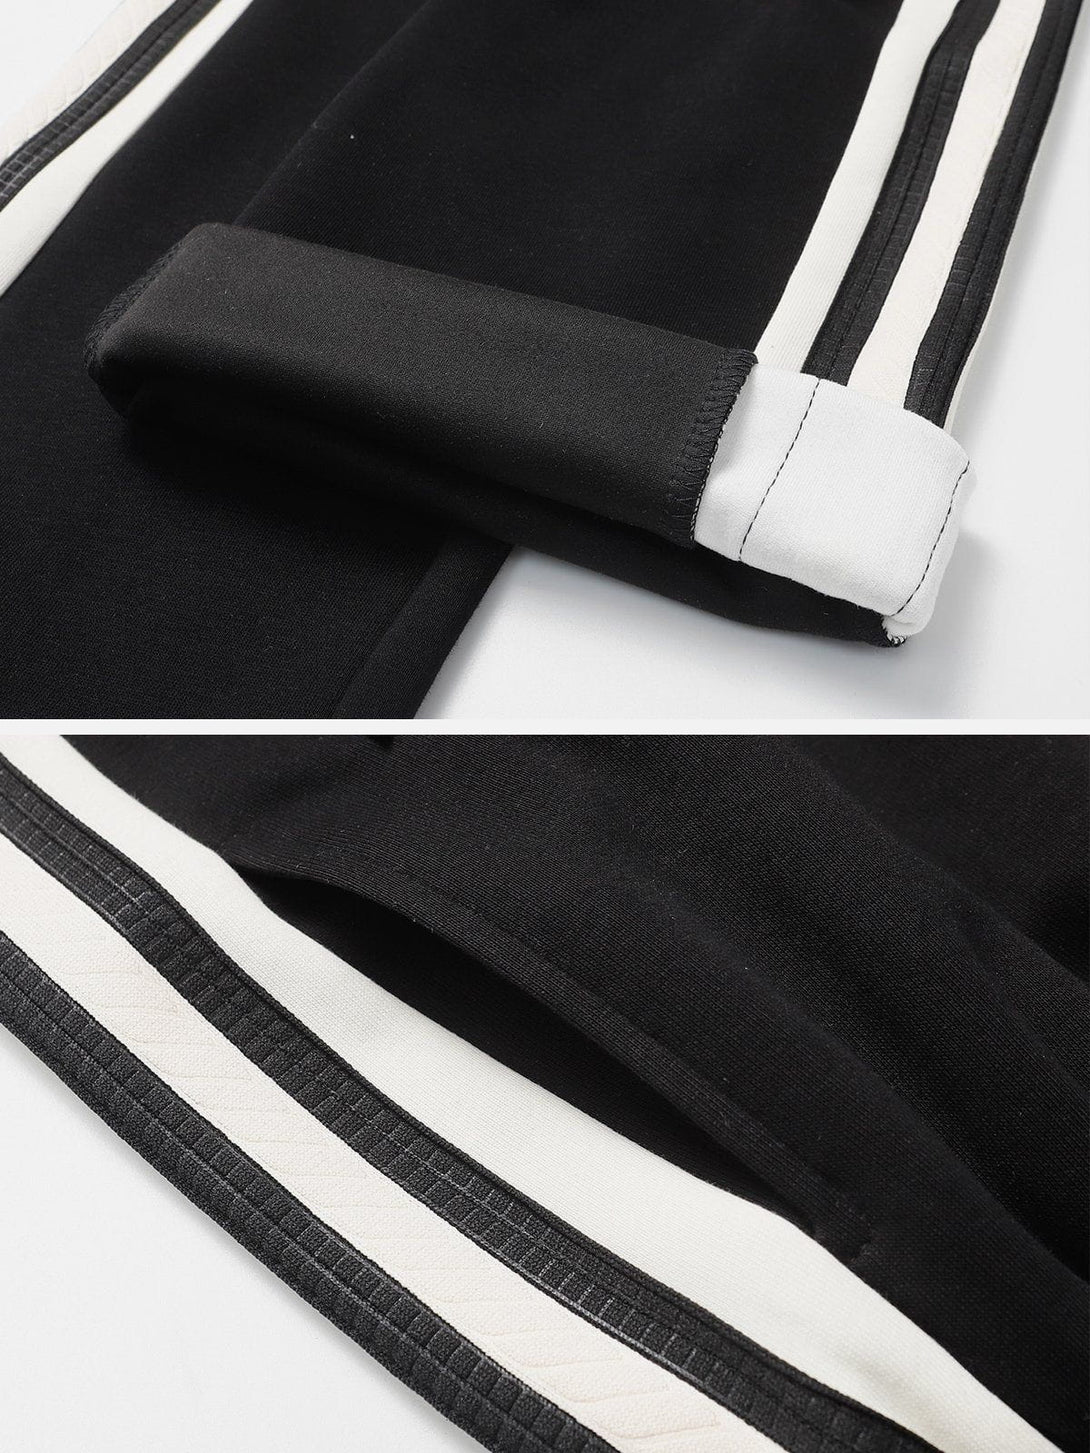 Levefly - Stripe Drawstring Sweatpants - Streetwear Fashion - levefly.com